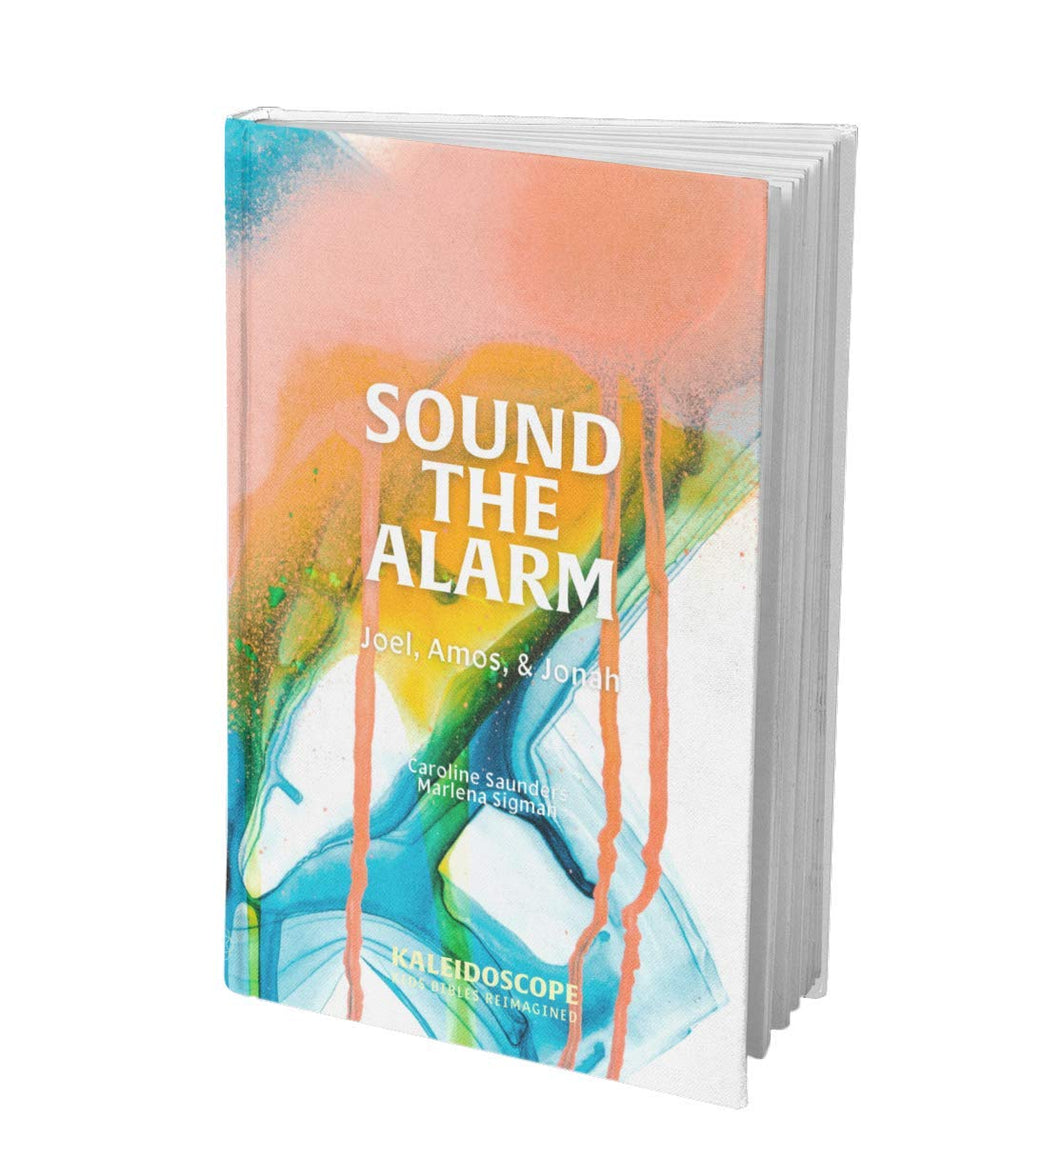 Sound the Alarm: Joel, Amos, & Jonah (Kaleidoscope)